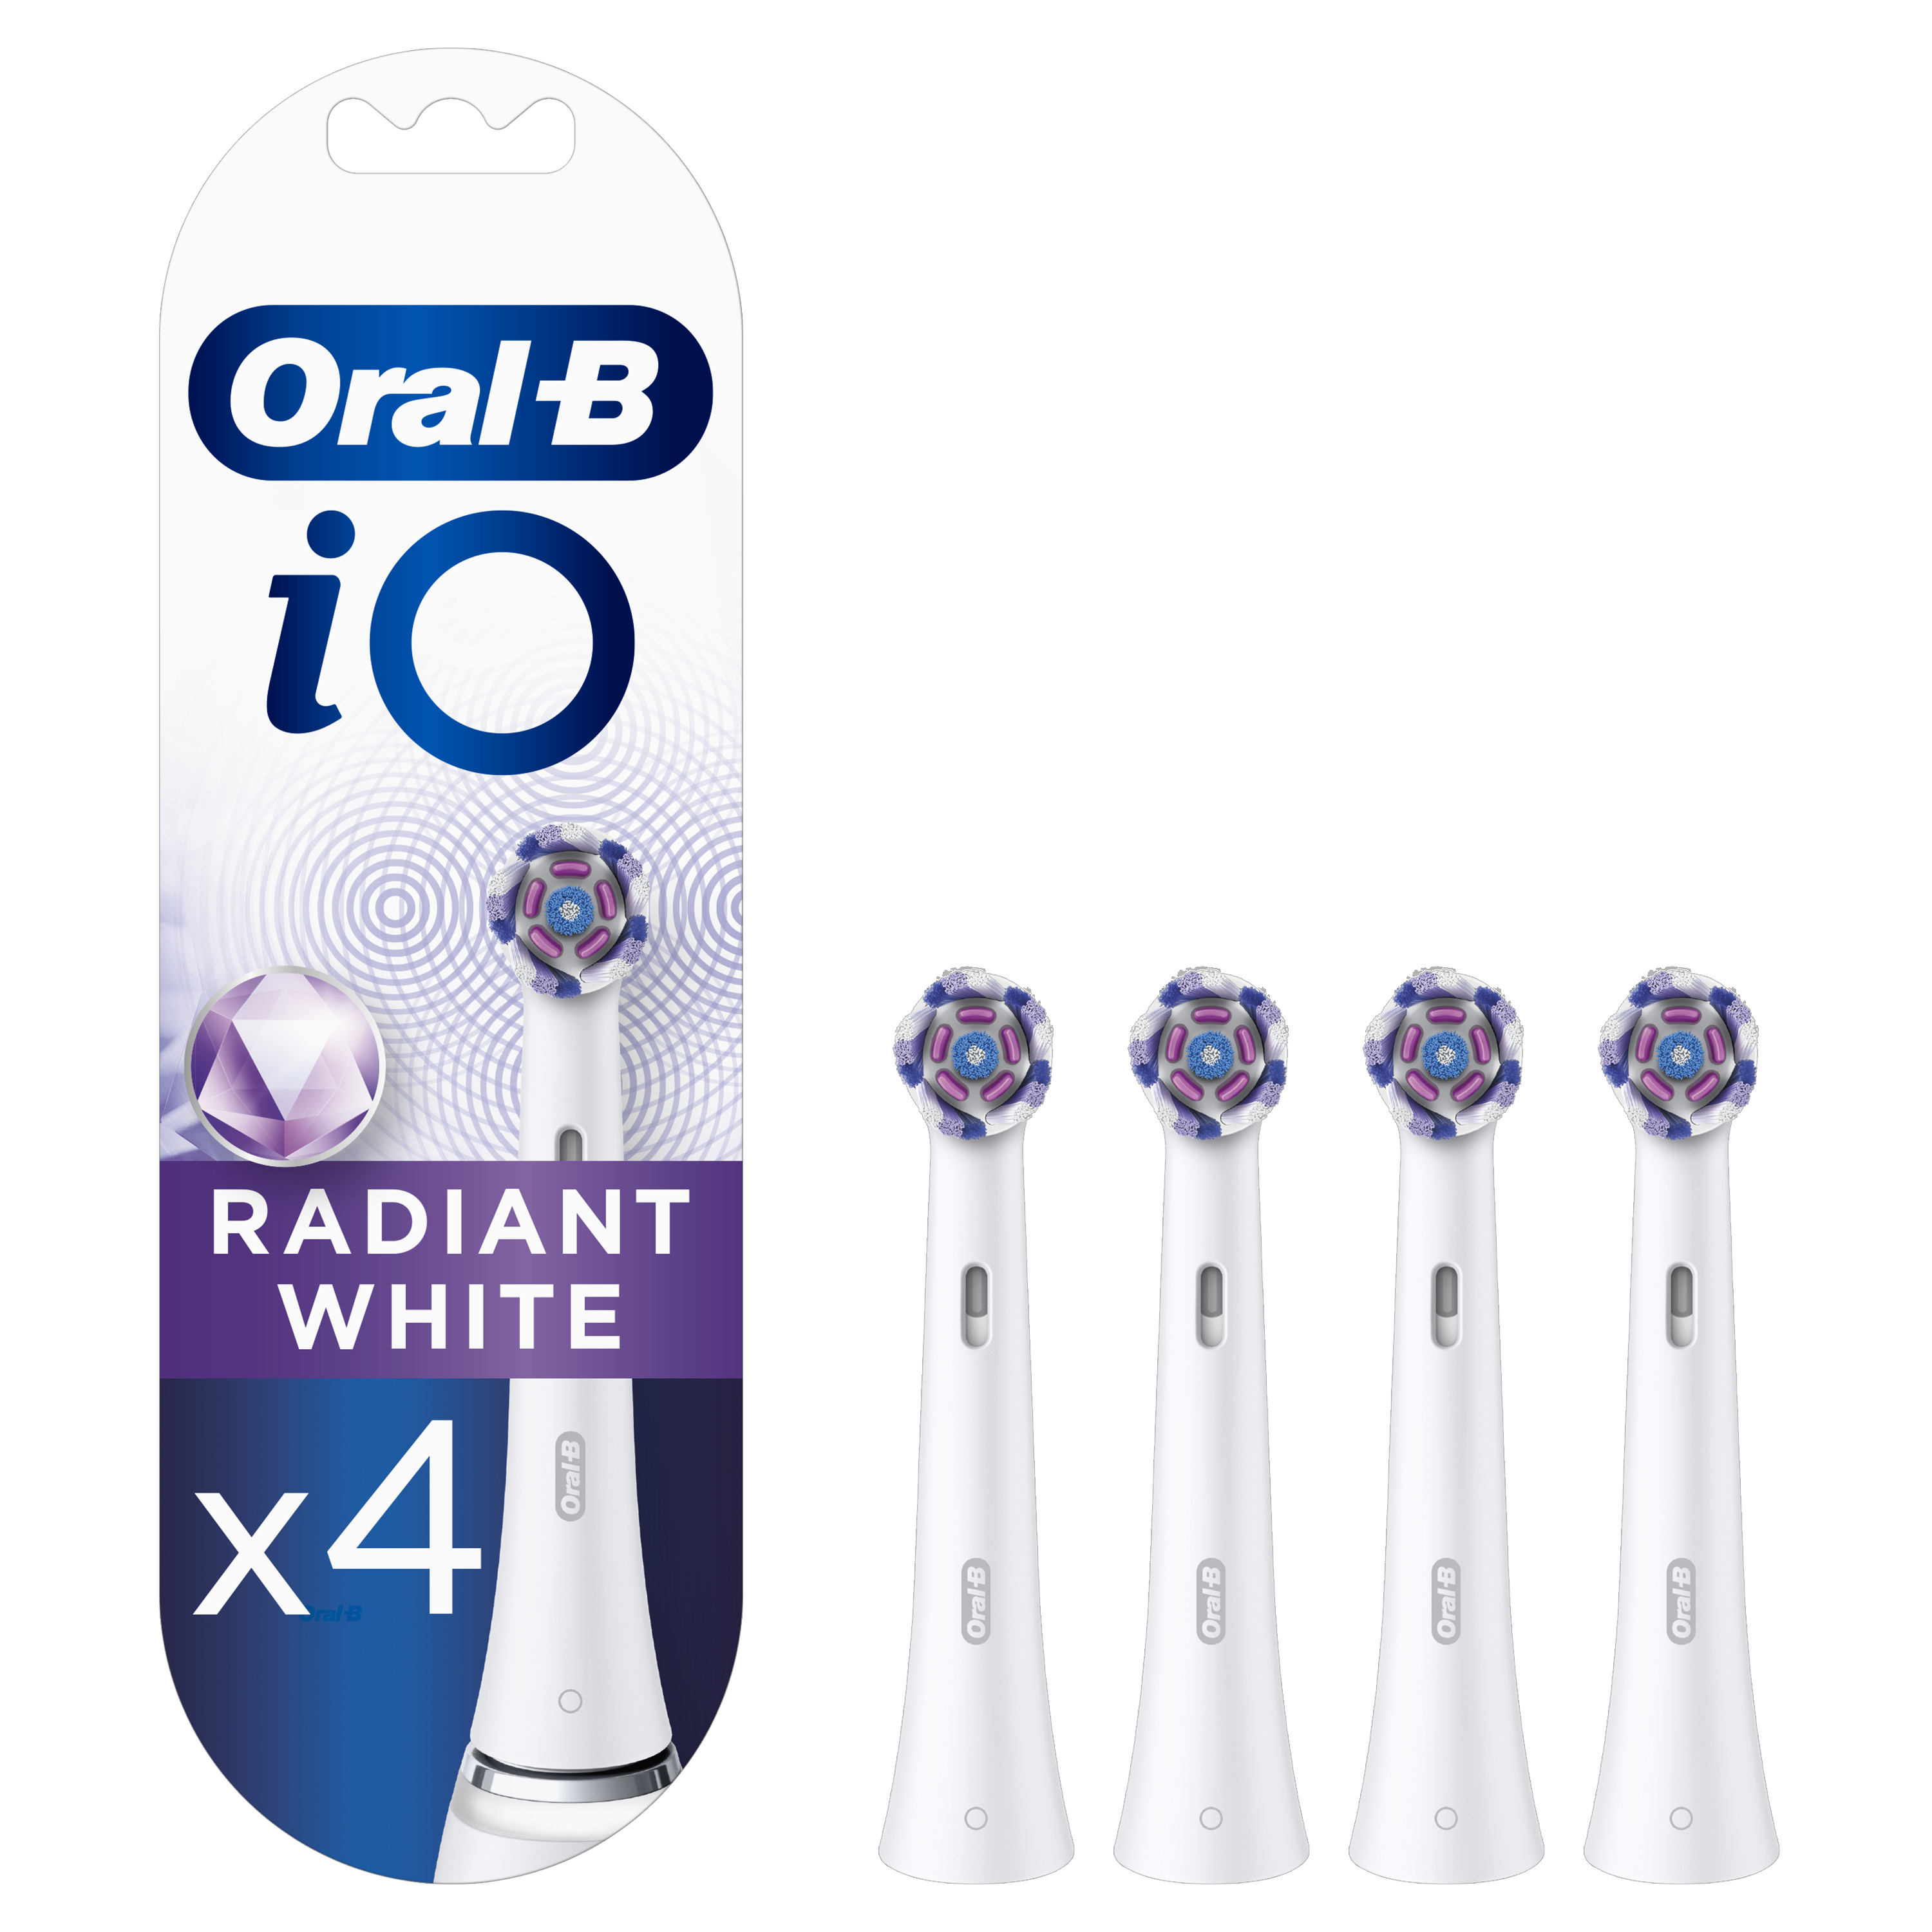 Oral-B - Oral-B iO Radiant White cabezal de recambio pack de 4 unidades